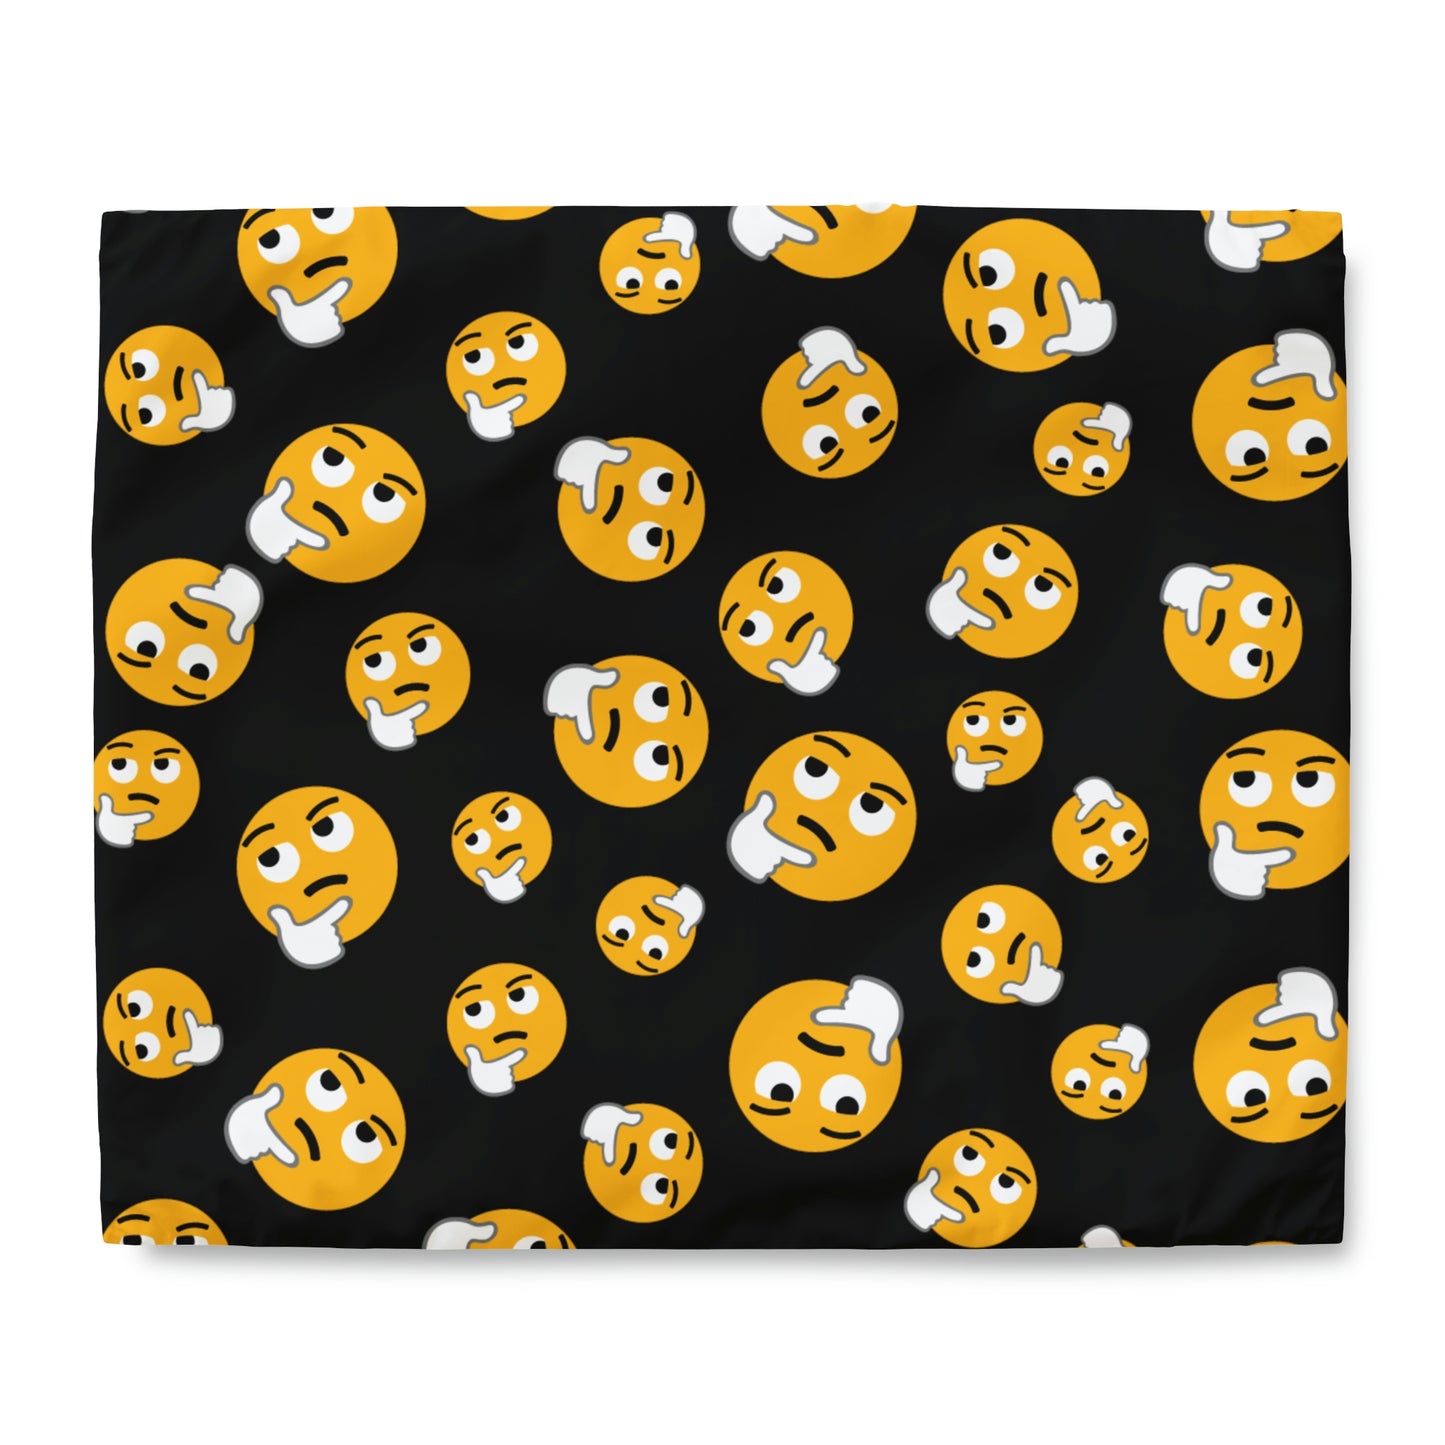 Emoji Style Duvet Cover